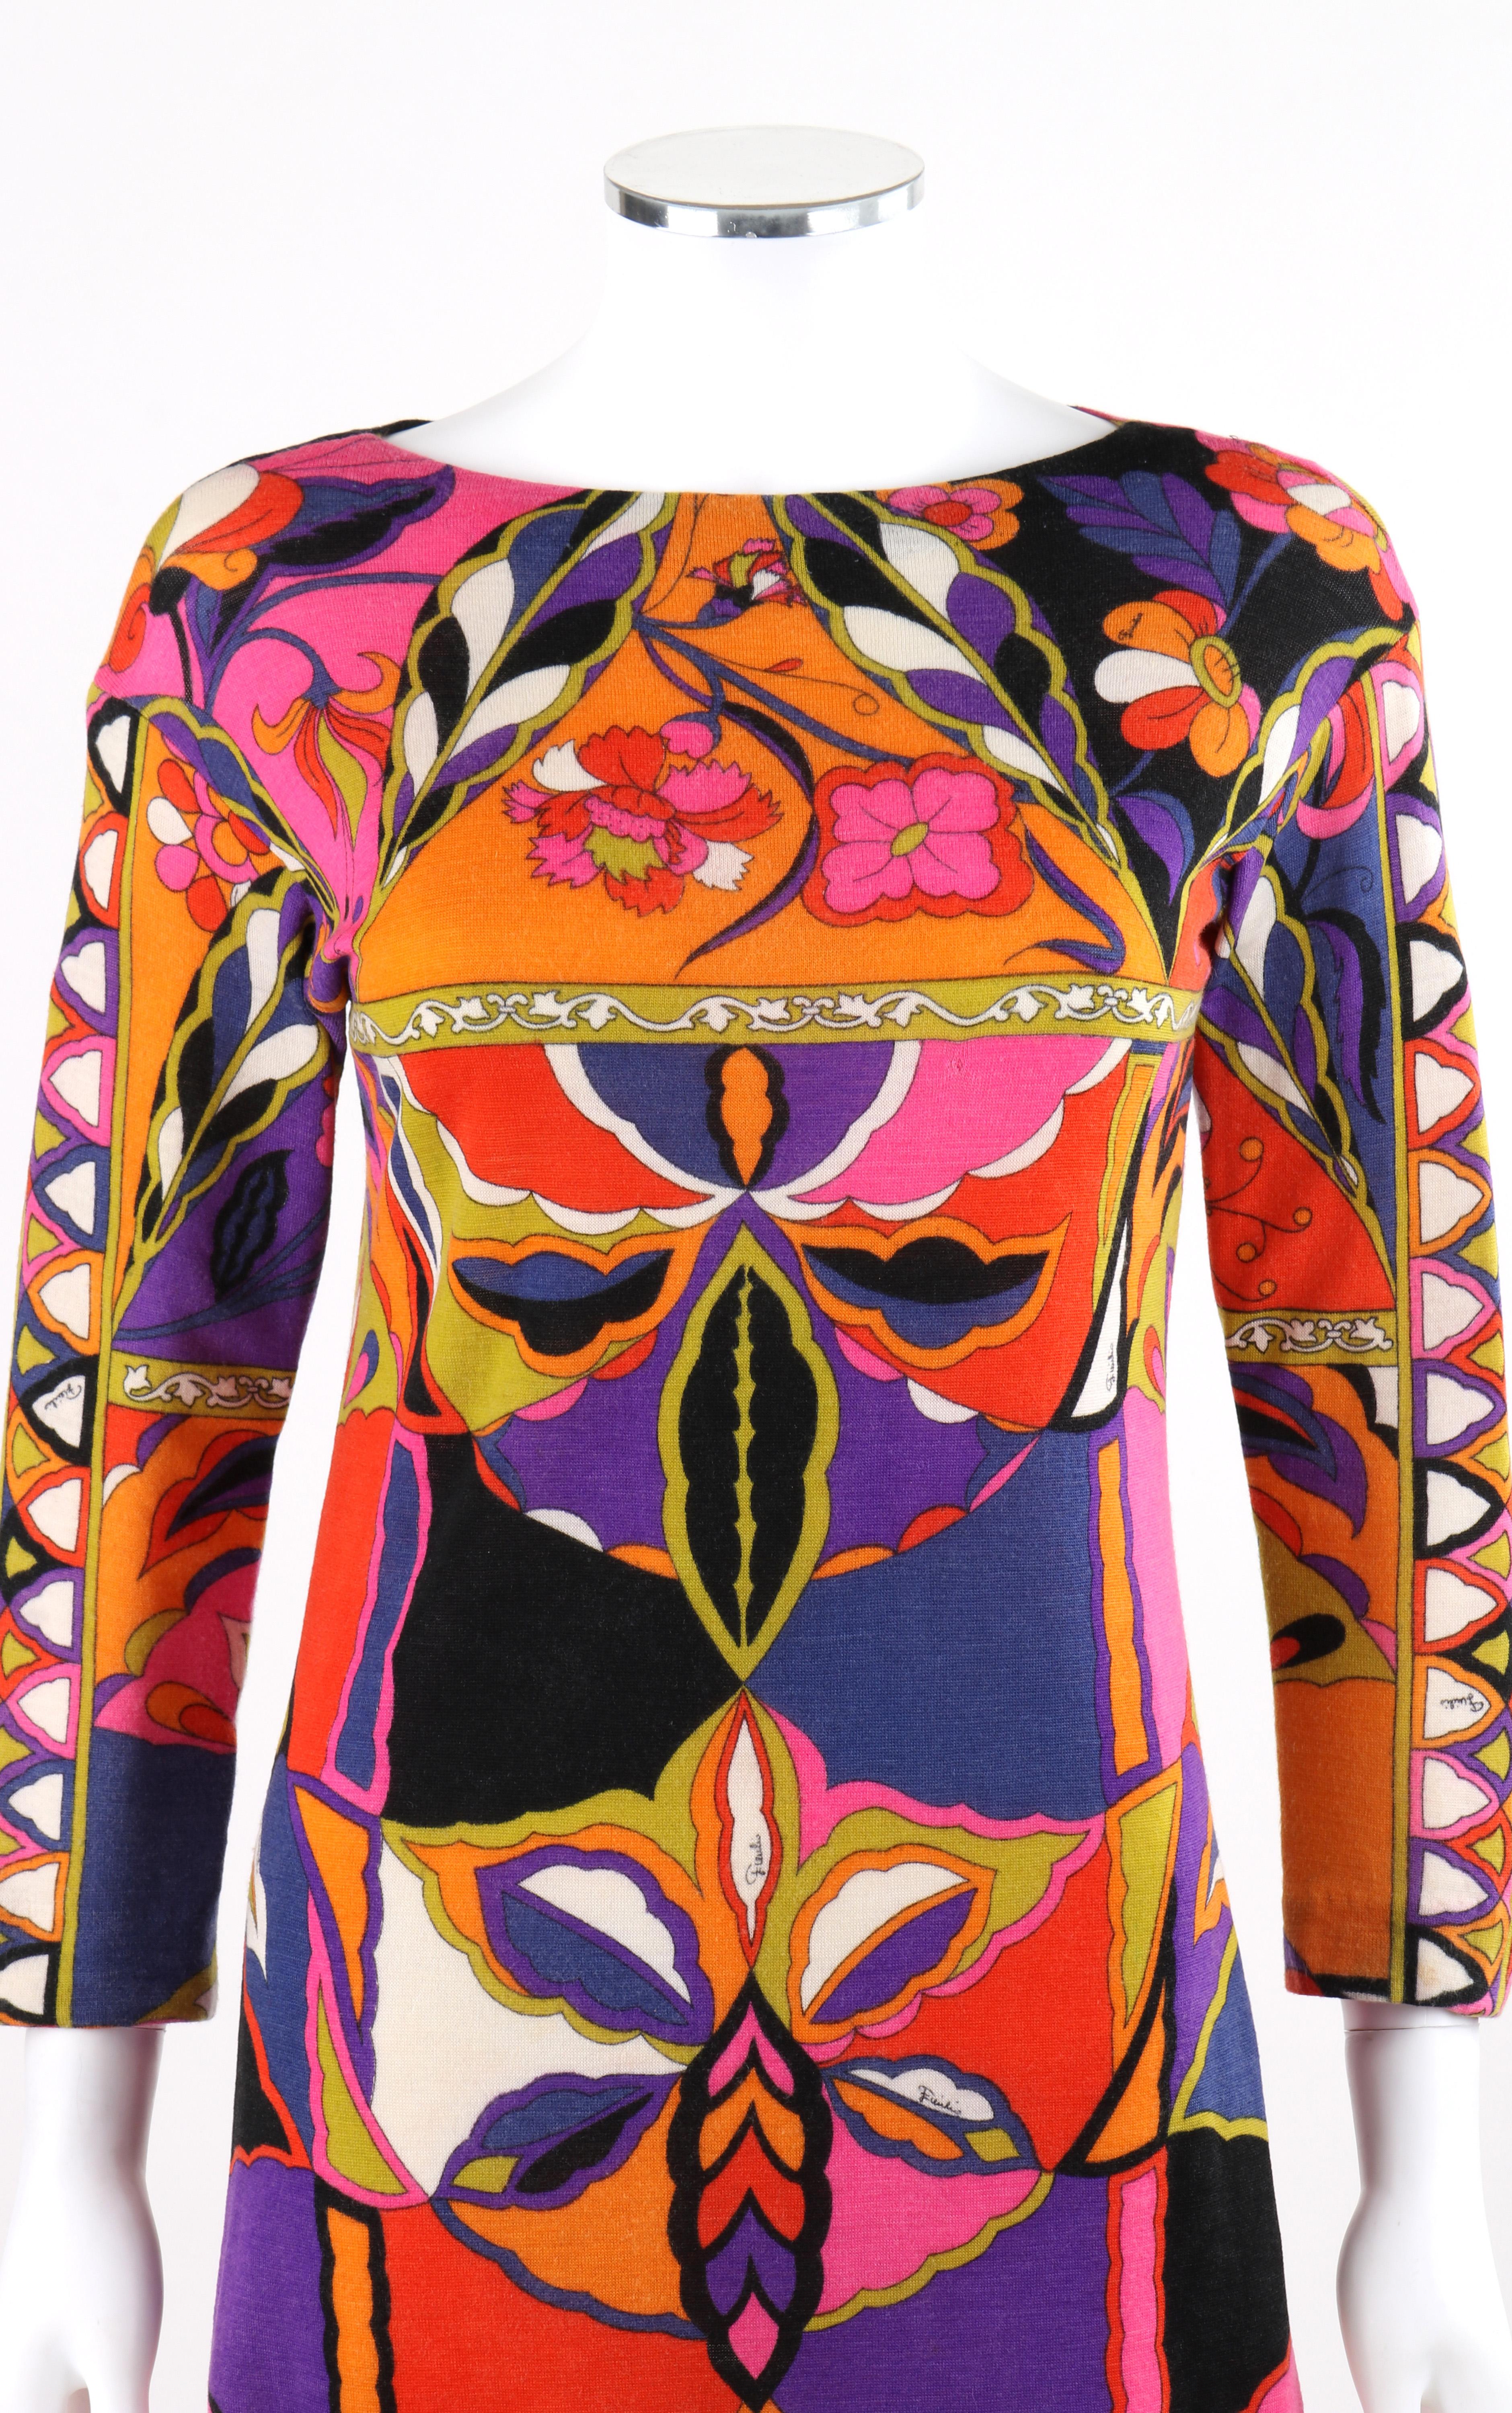 EMILIO PUCCI c.1960’s Geometric Floral Signature Print Cashmere Knit Shift Dress
Circa: 1960’s  
Label(s): Emilio Pucci; Made in Italy for Lord & Taylor 
Designer: Emilio Pucci 
Style: Shift dress
Color(s): Shades of orange, purple. black, white,